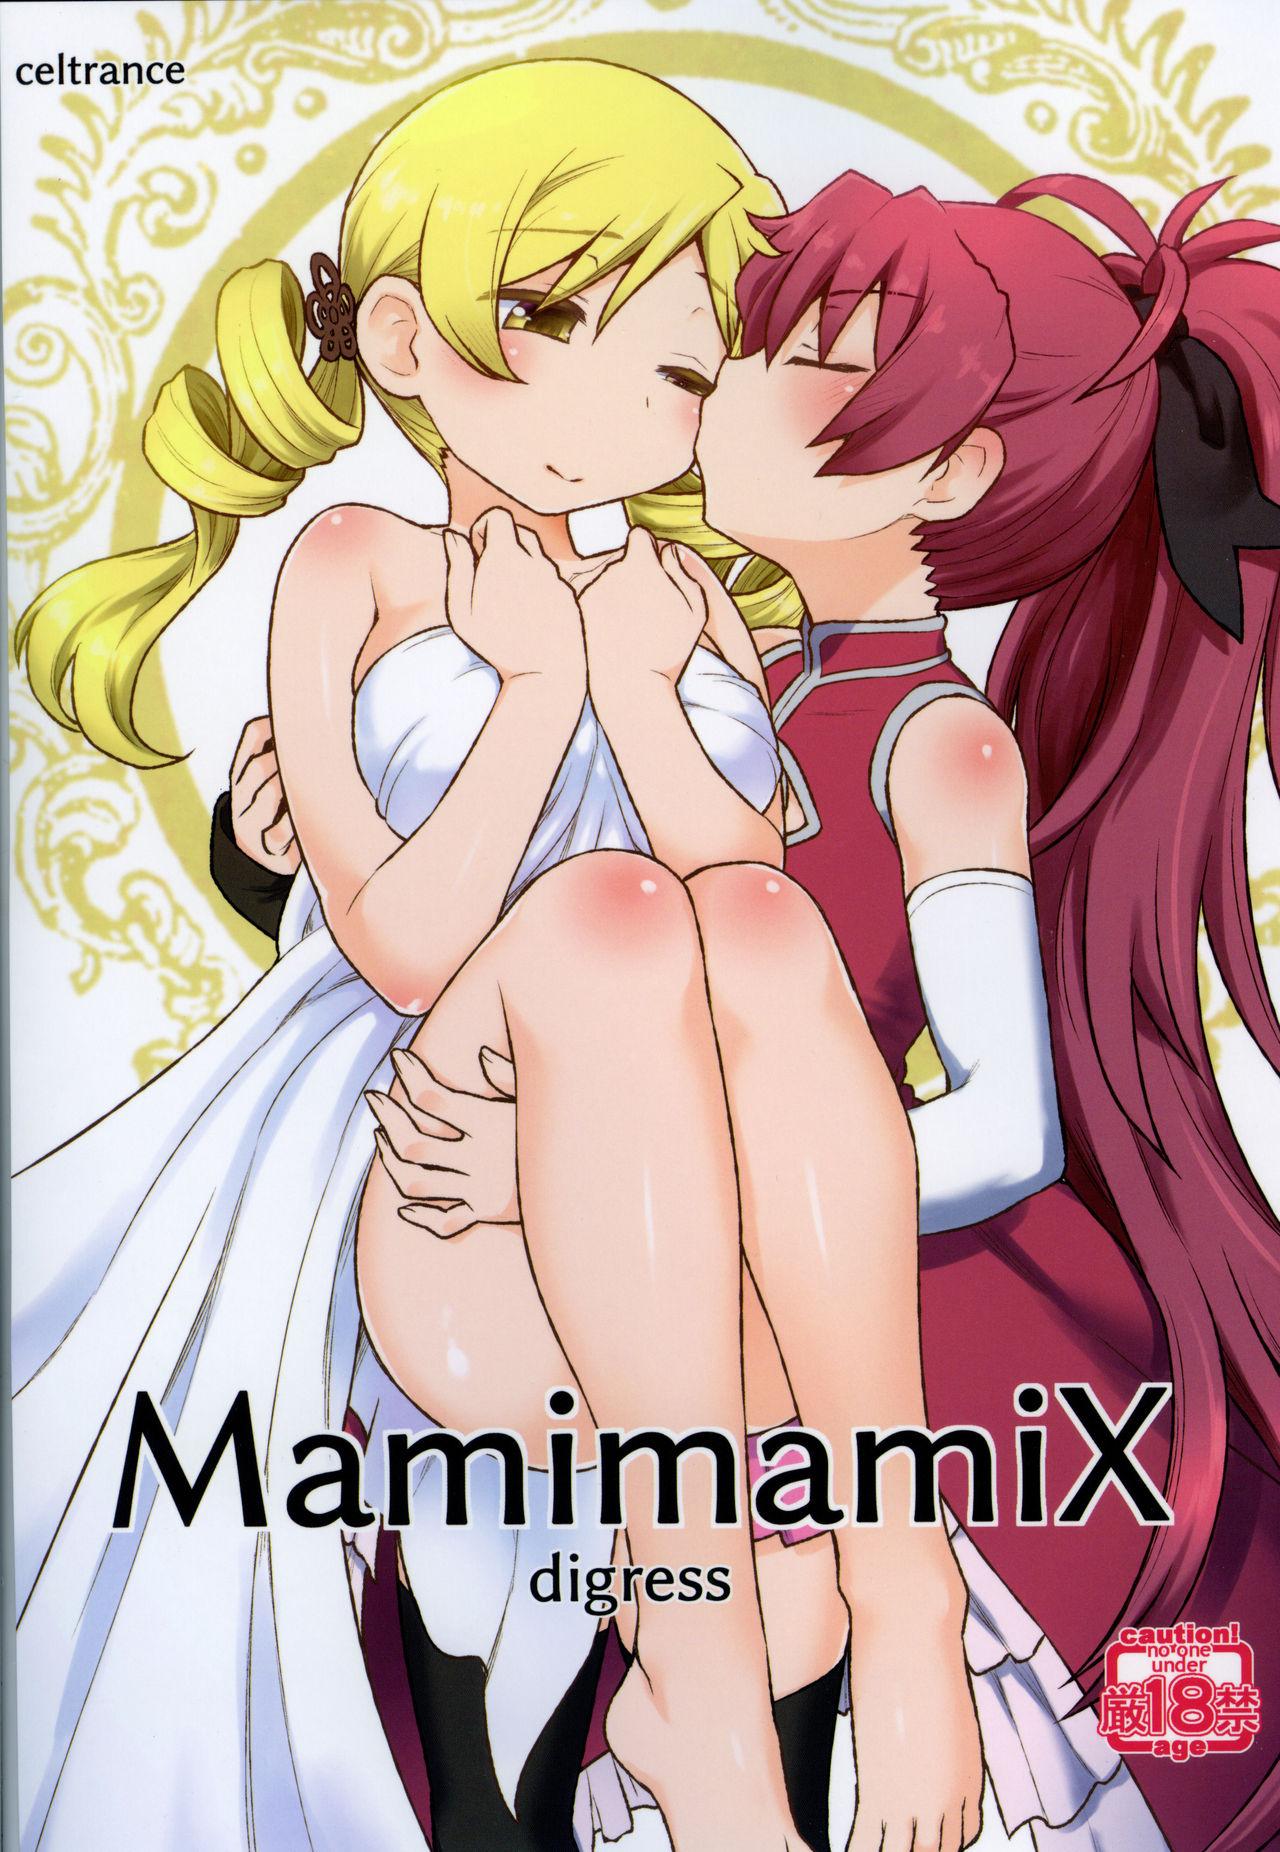 MamimamiX digress 0